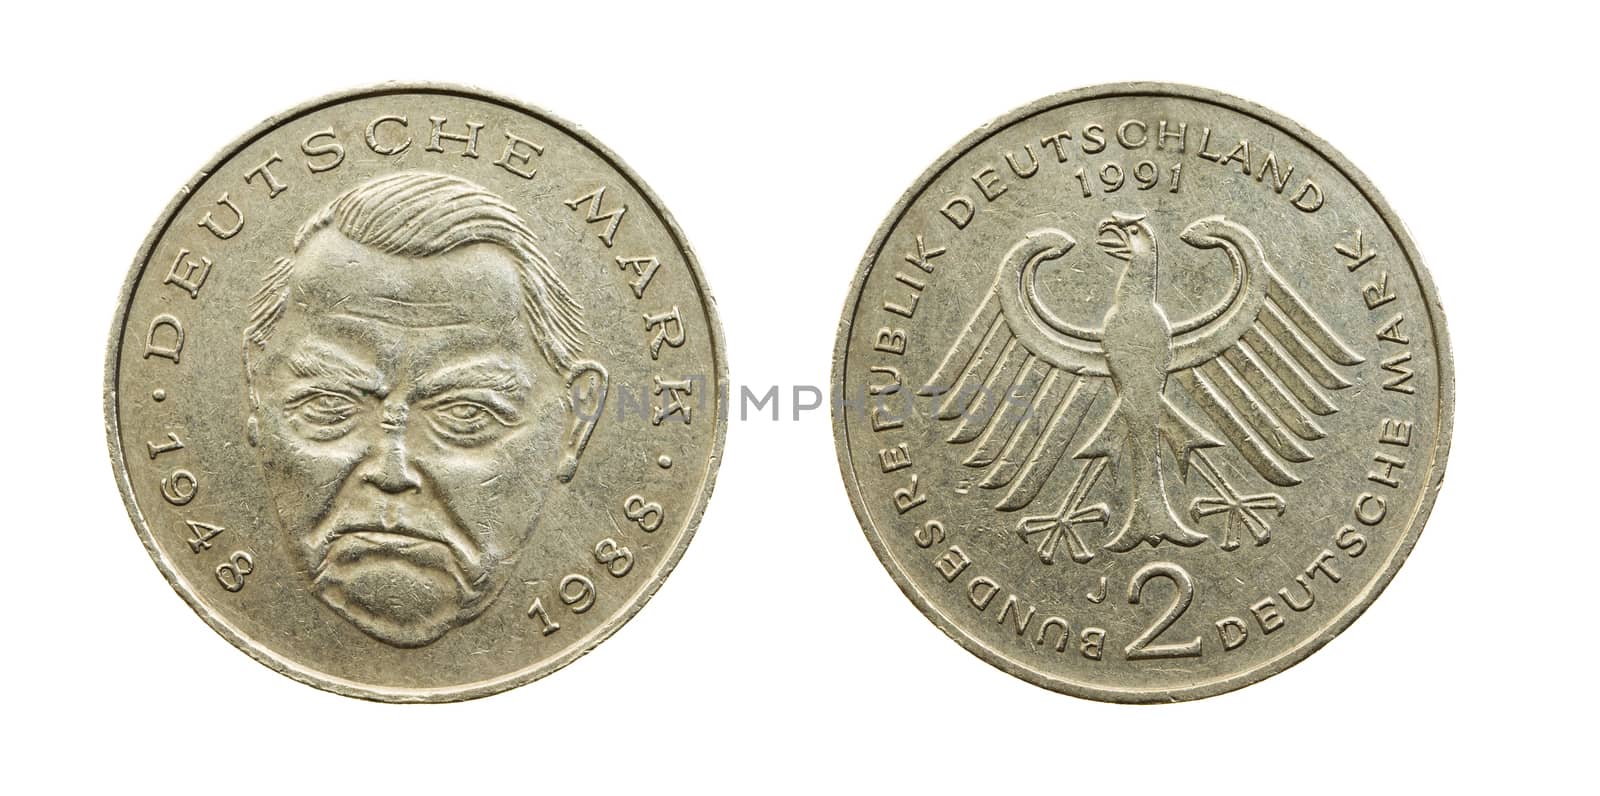   German coin-mark  by avq